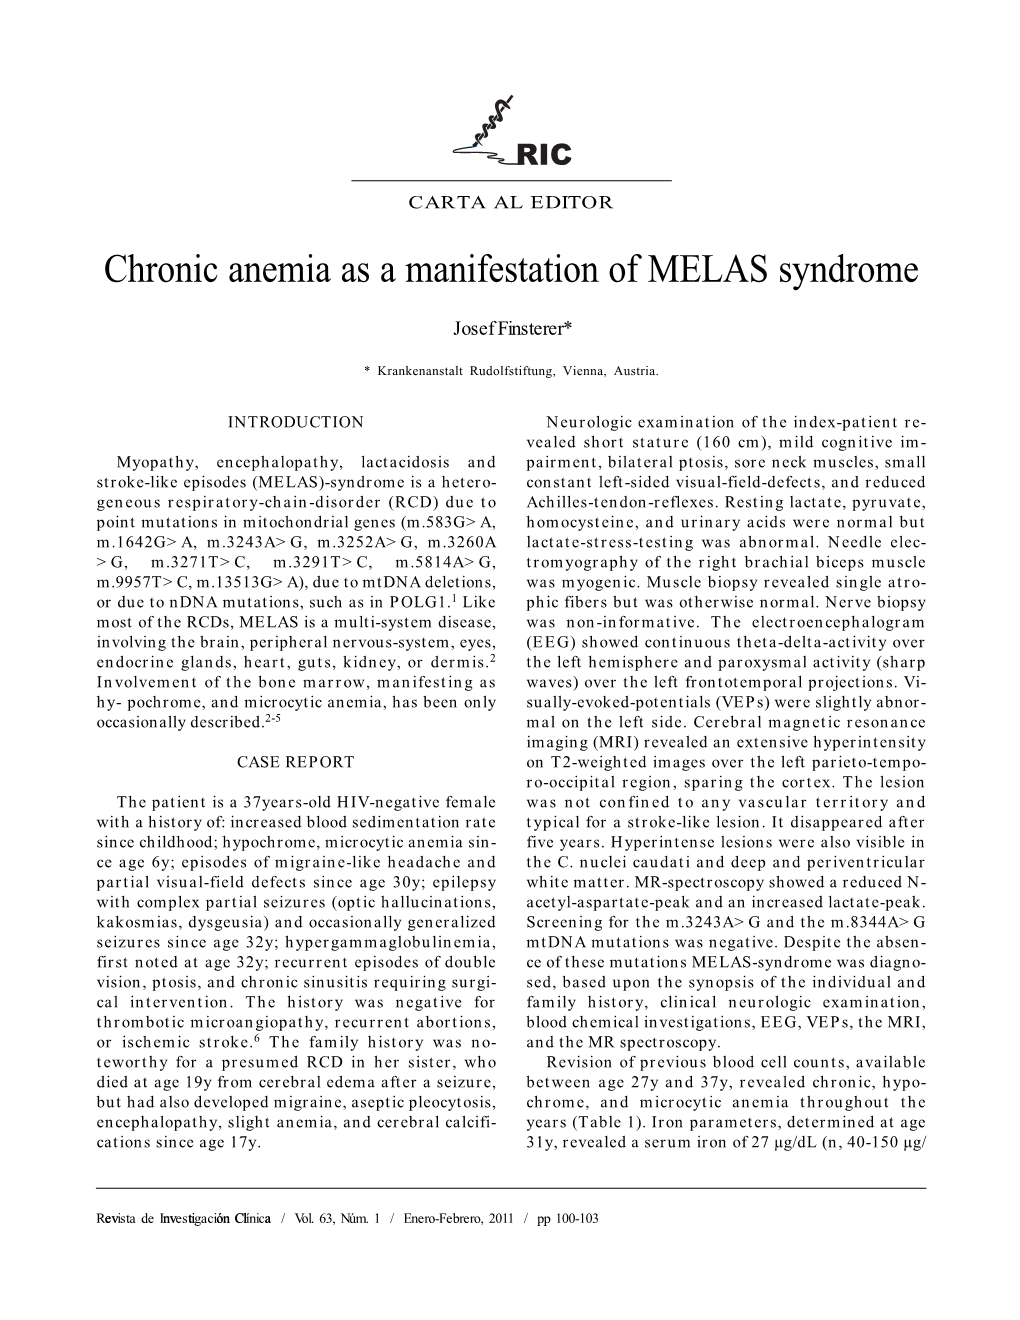 Chronic Anemia As a Manifestation of MELAS Syndrome